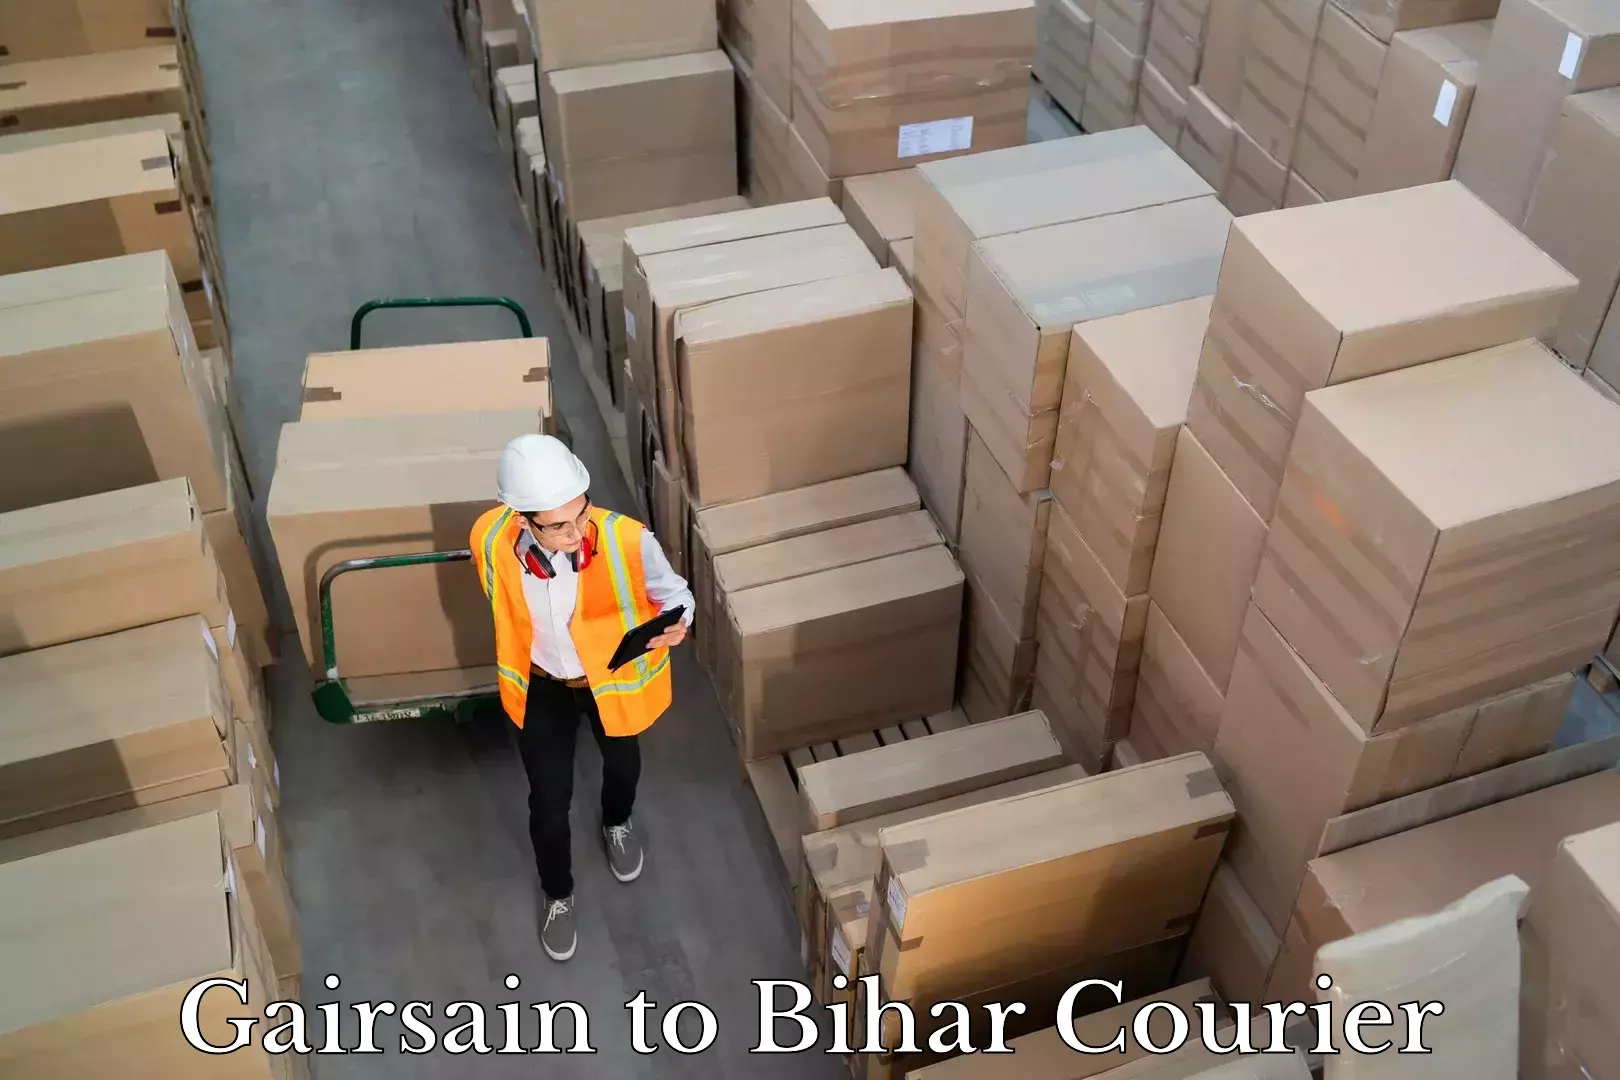 Courier service innovation Gairsain to Bihar